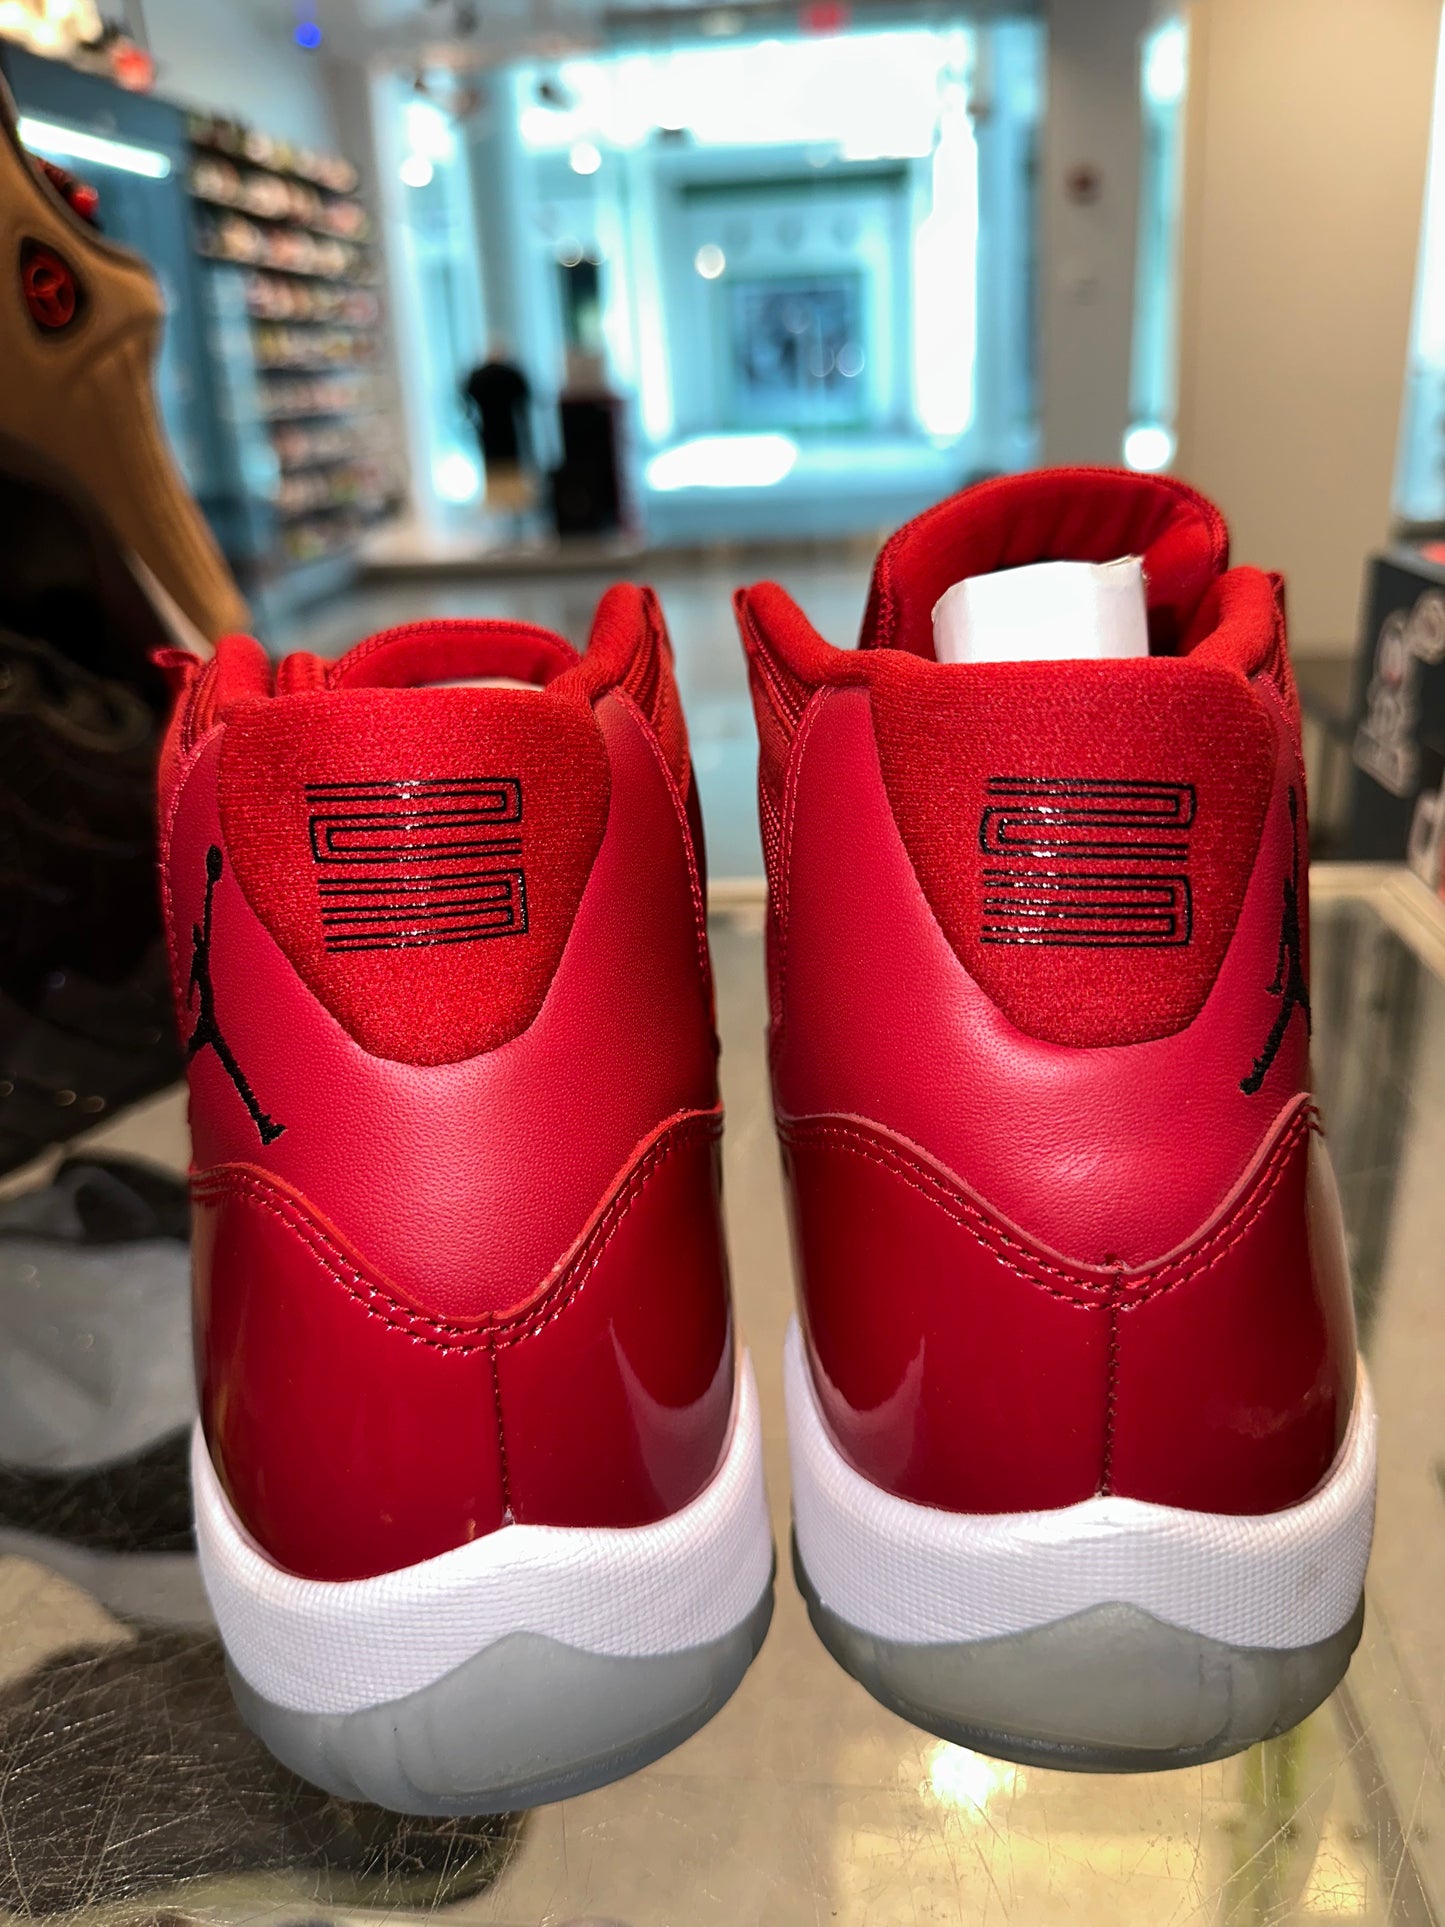 Size 8.5 Air Jordan 11 “Win Like 96” Brand New (Mall)